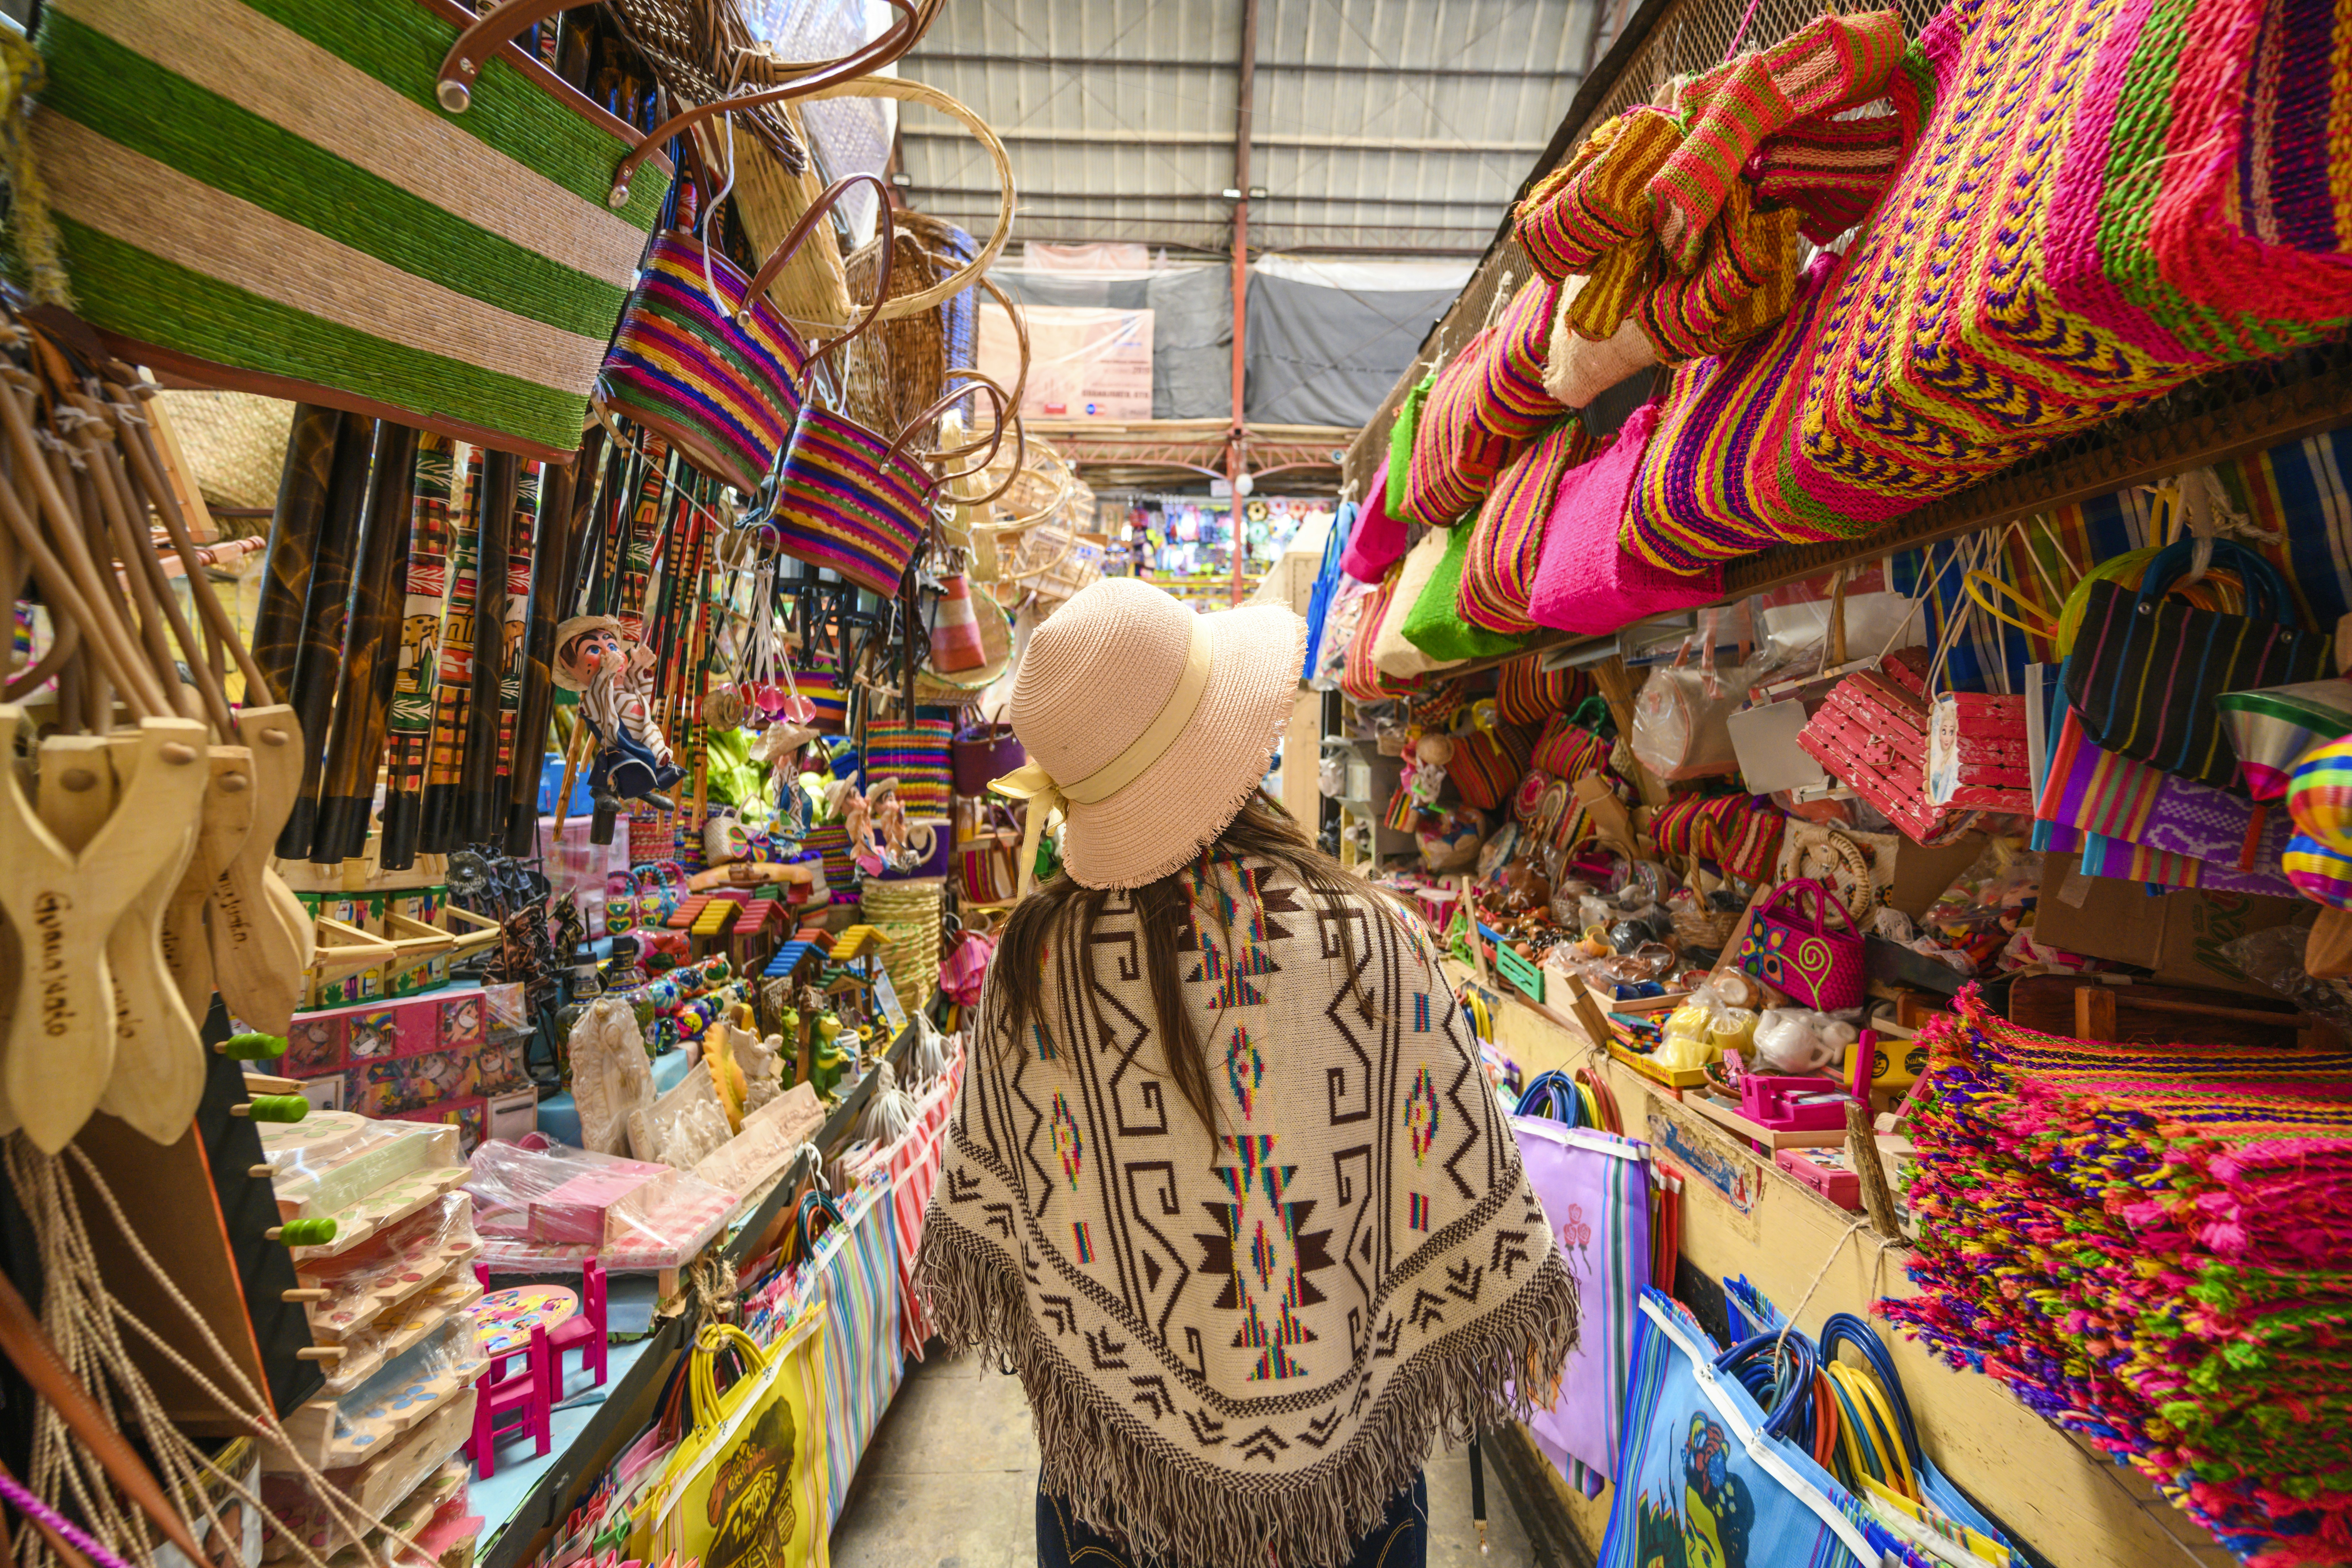 Tourist shopping for souvenirs at the Hidalgo market in Guanajuato, Mexico